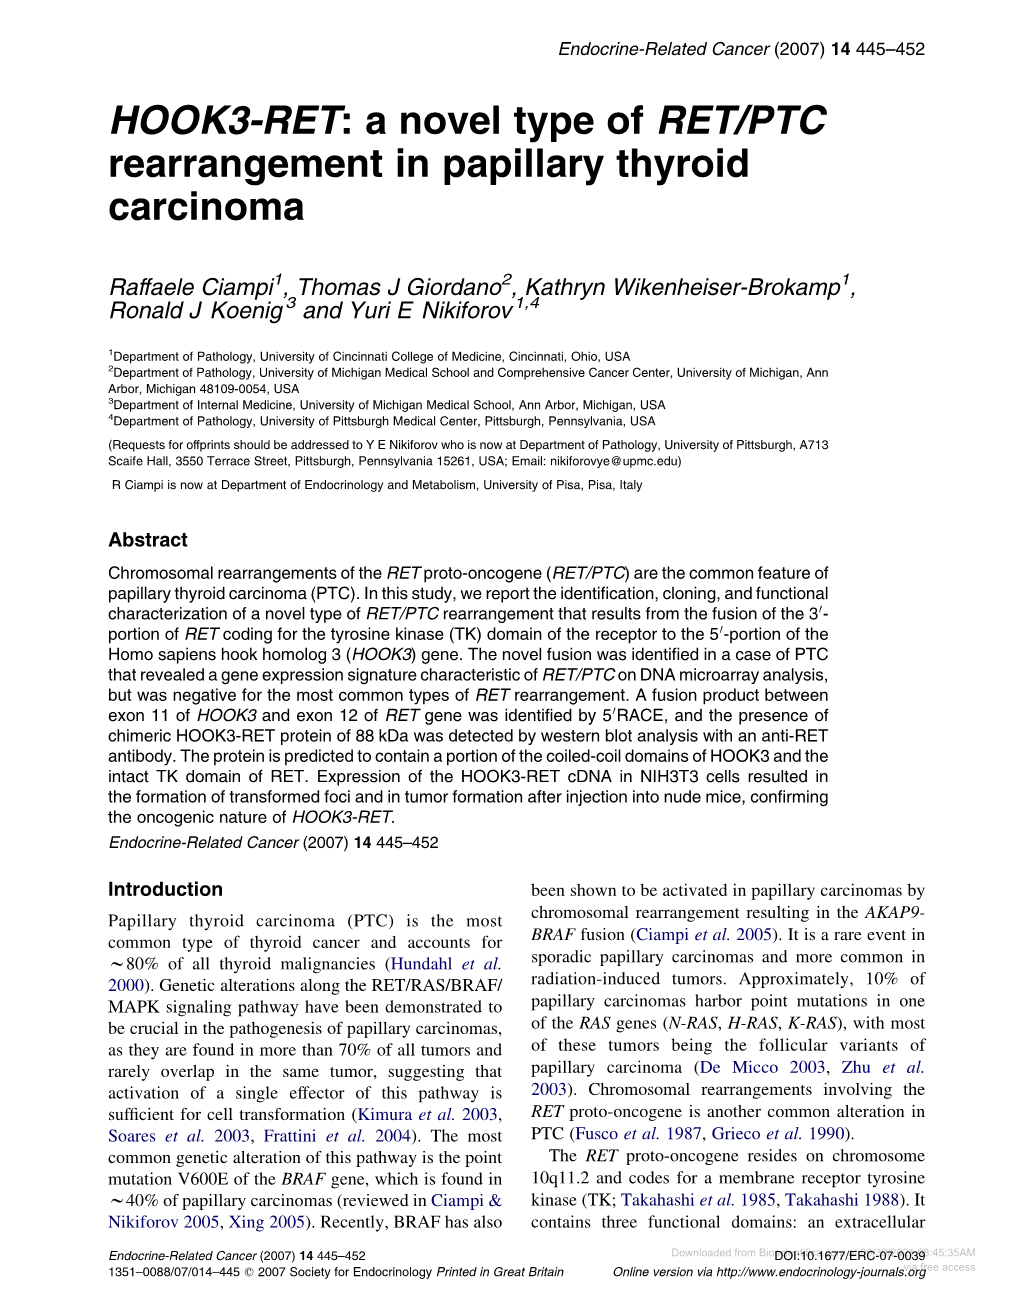 HOOK3-RET: a Novel Type of RET/PTC Rearrangement in Papillary Thyroid Carcinoma